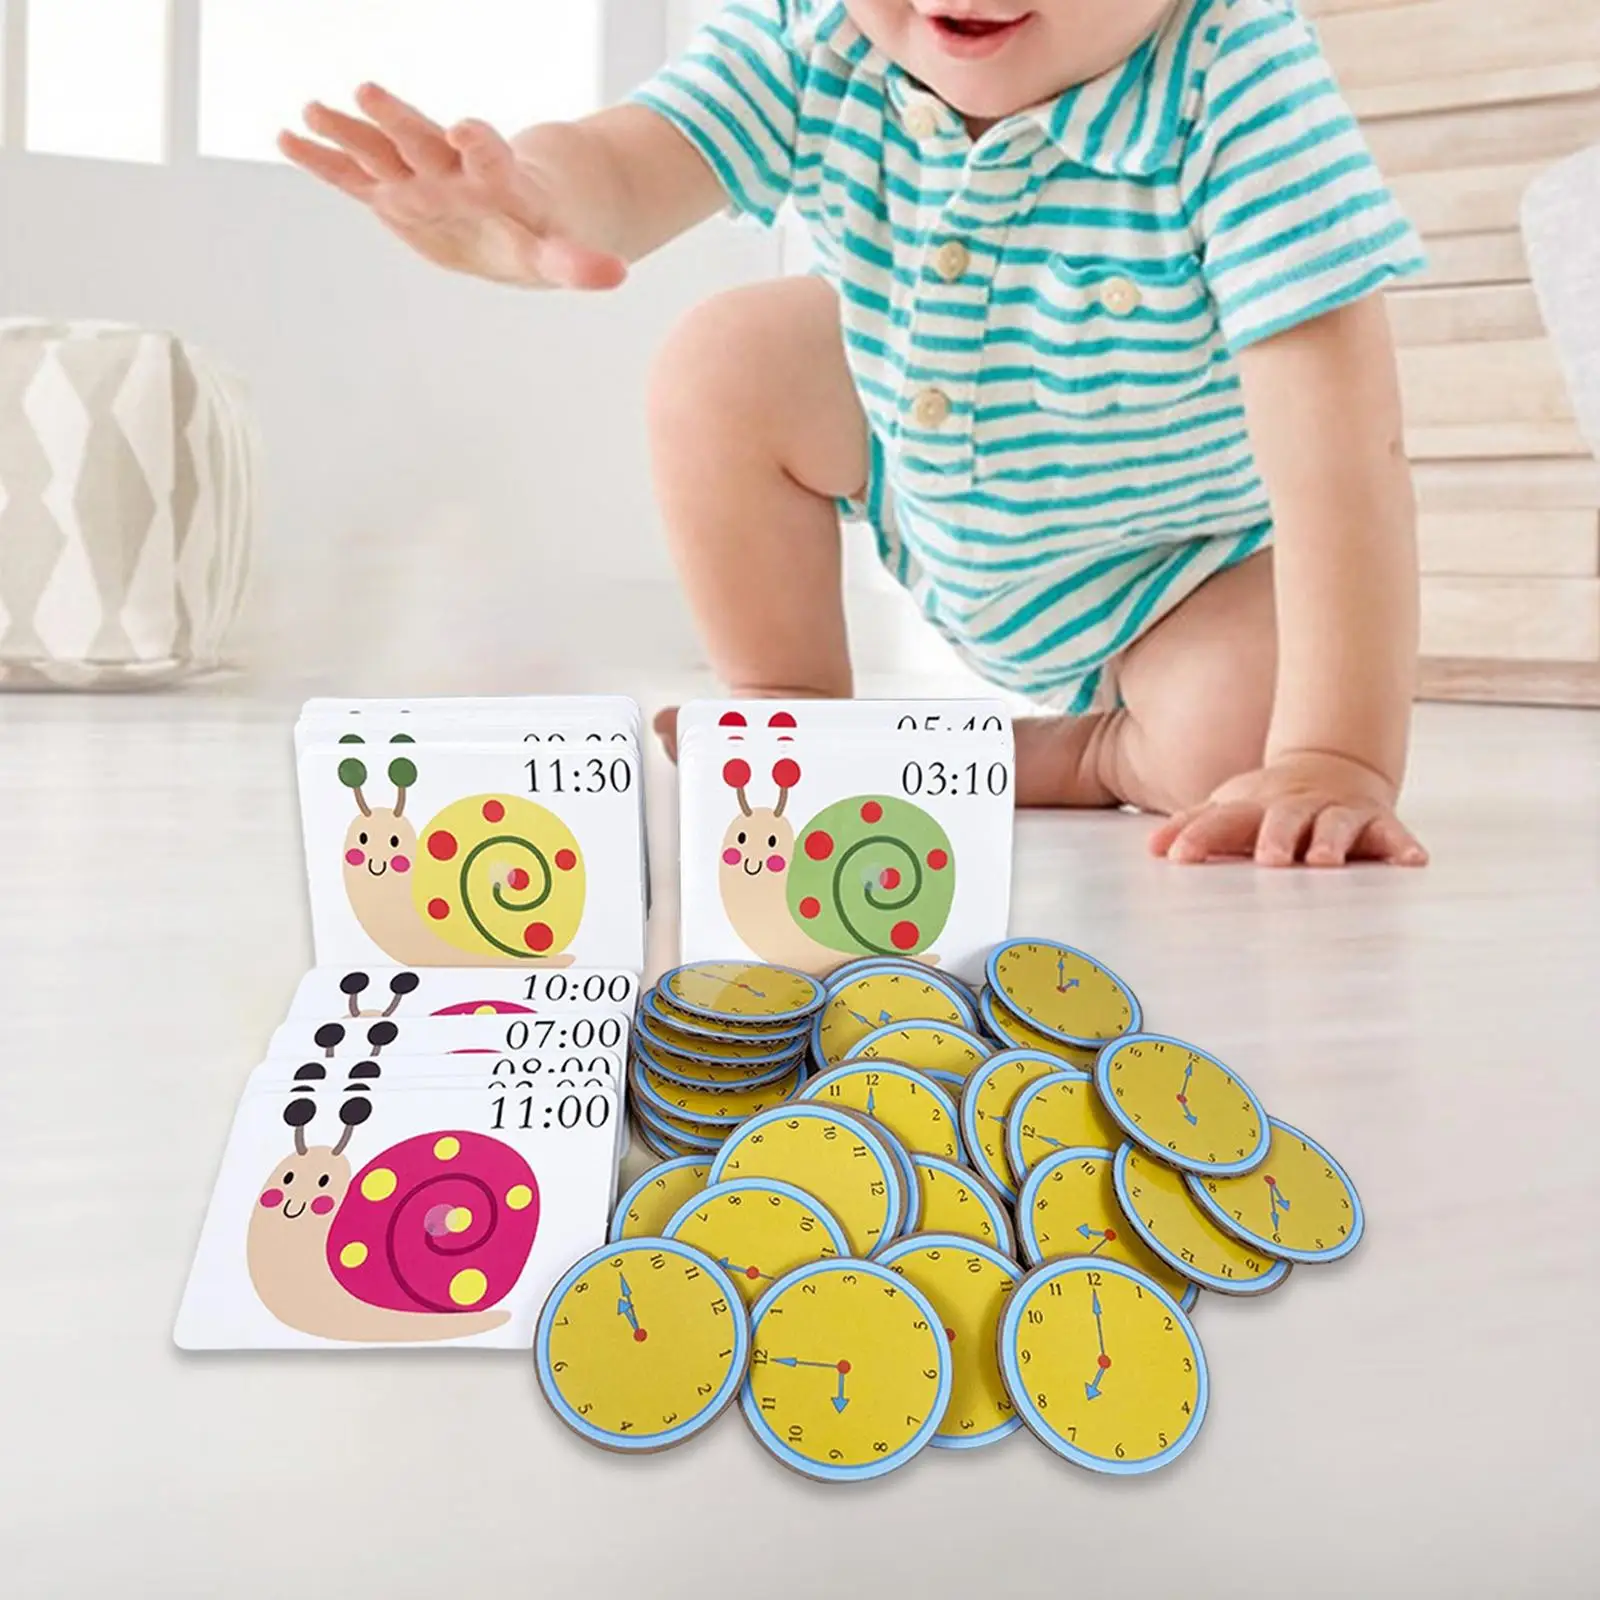 Kids Montessori Teaching Clock Cards Cognition Clocks Teaching Aids Colorful